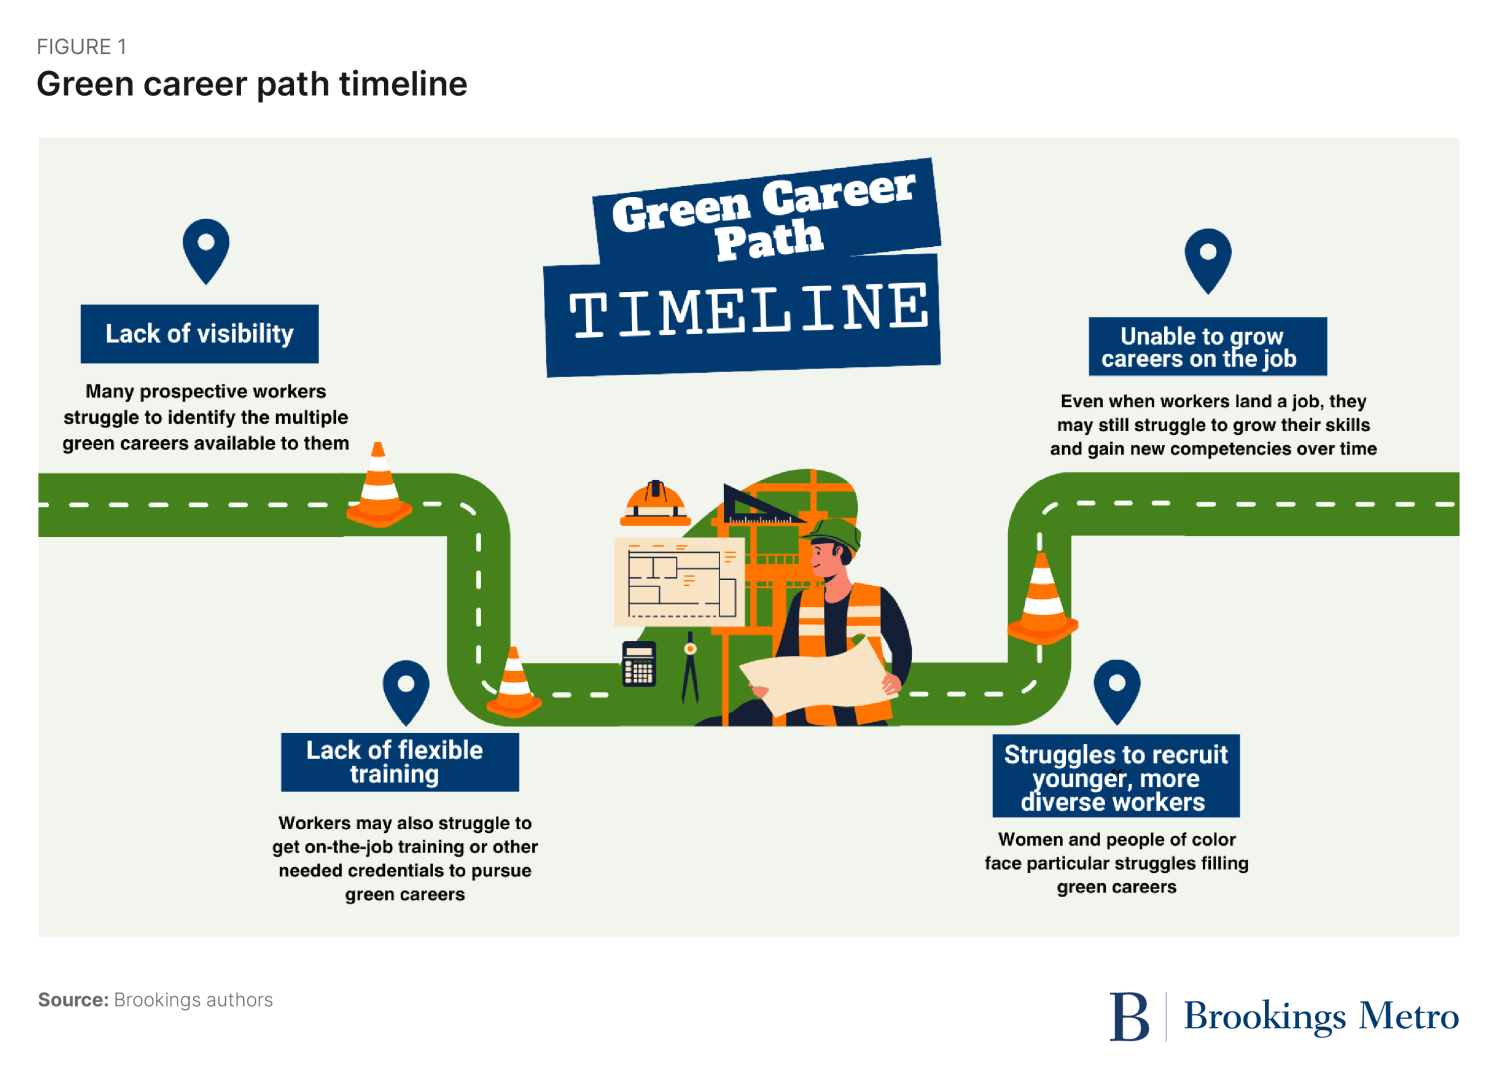 Figure 1. Green Career Path Timeline